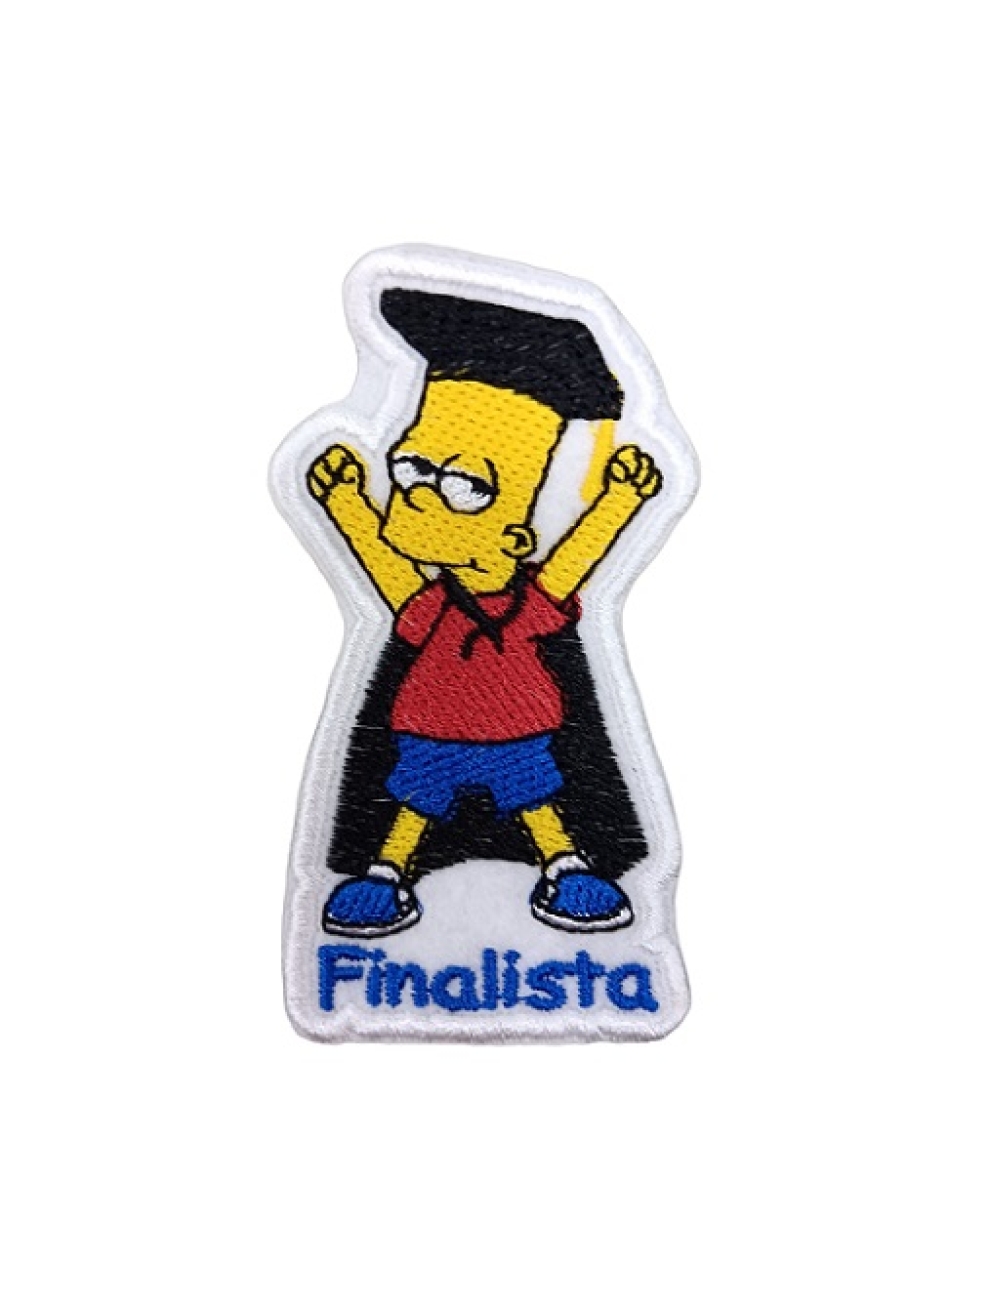 Finalista (Bart Simpson)